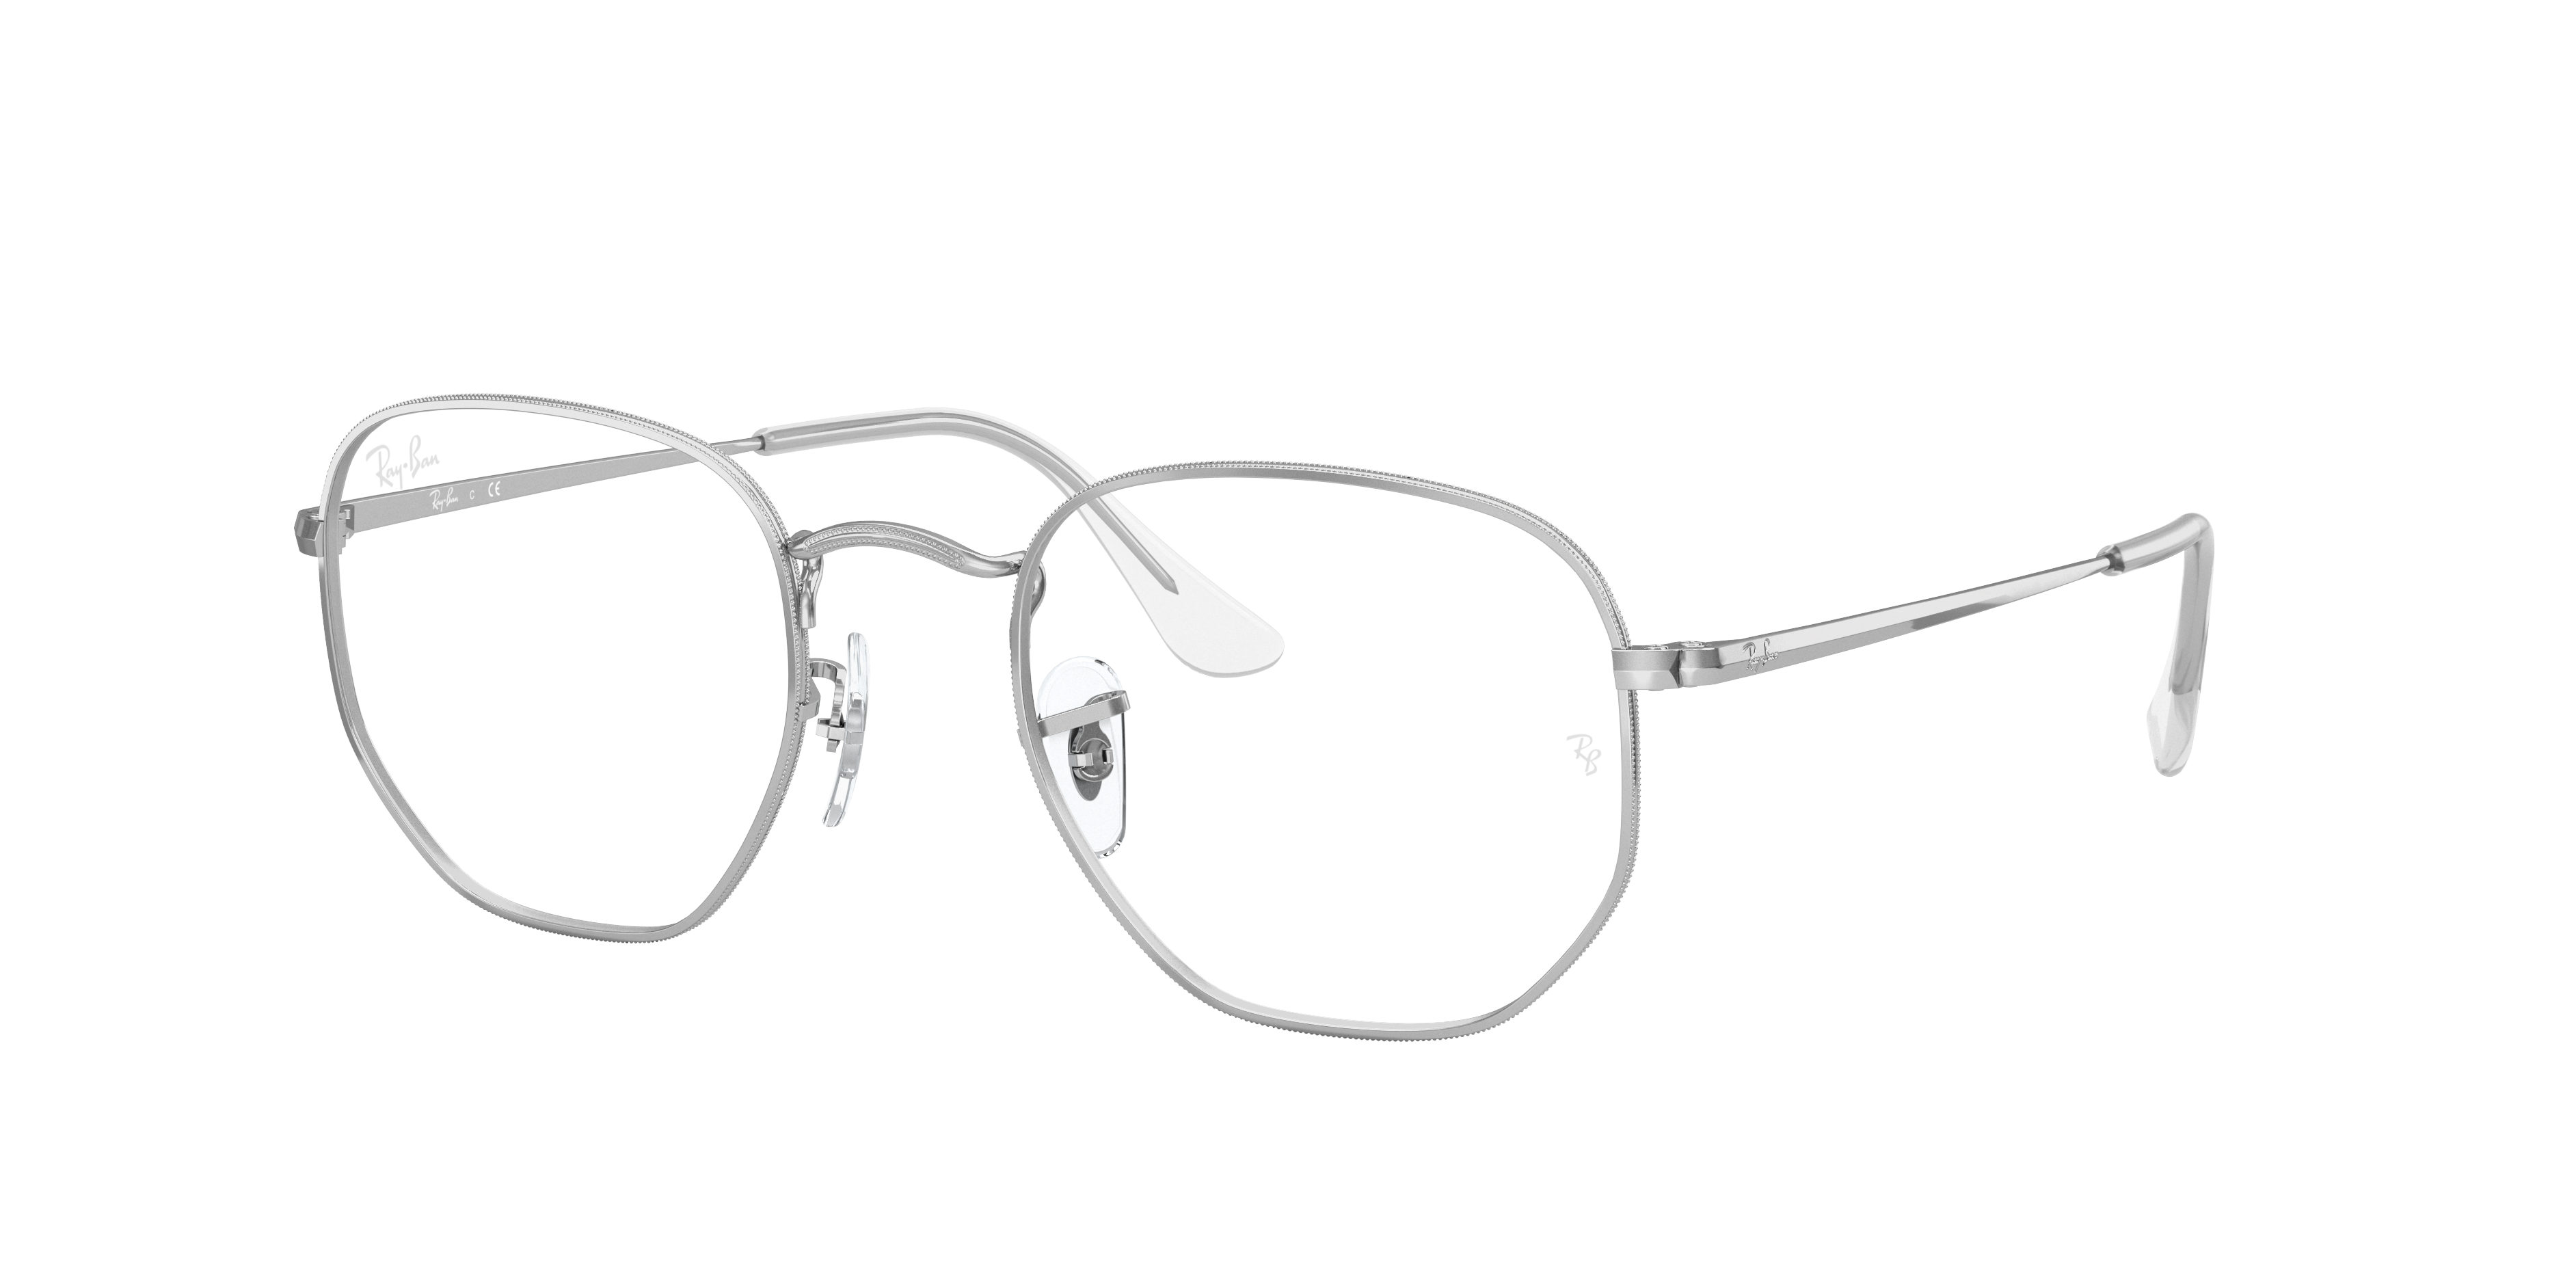 Hexagonal Optics Eyeglasses with Silver Frame | Ray-Ban®